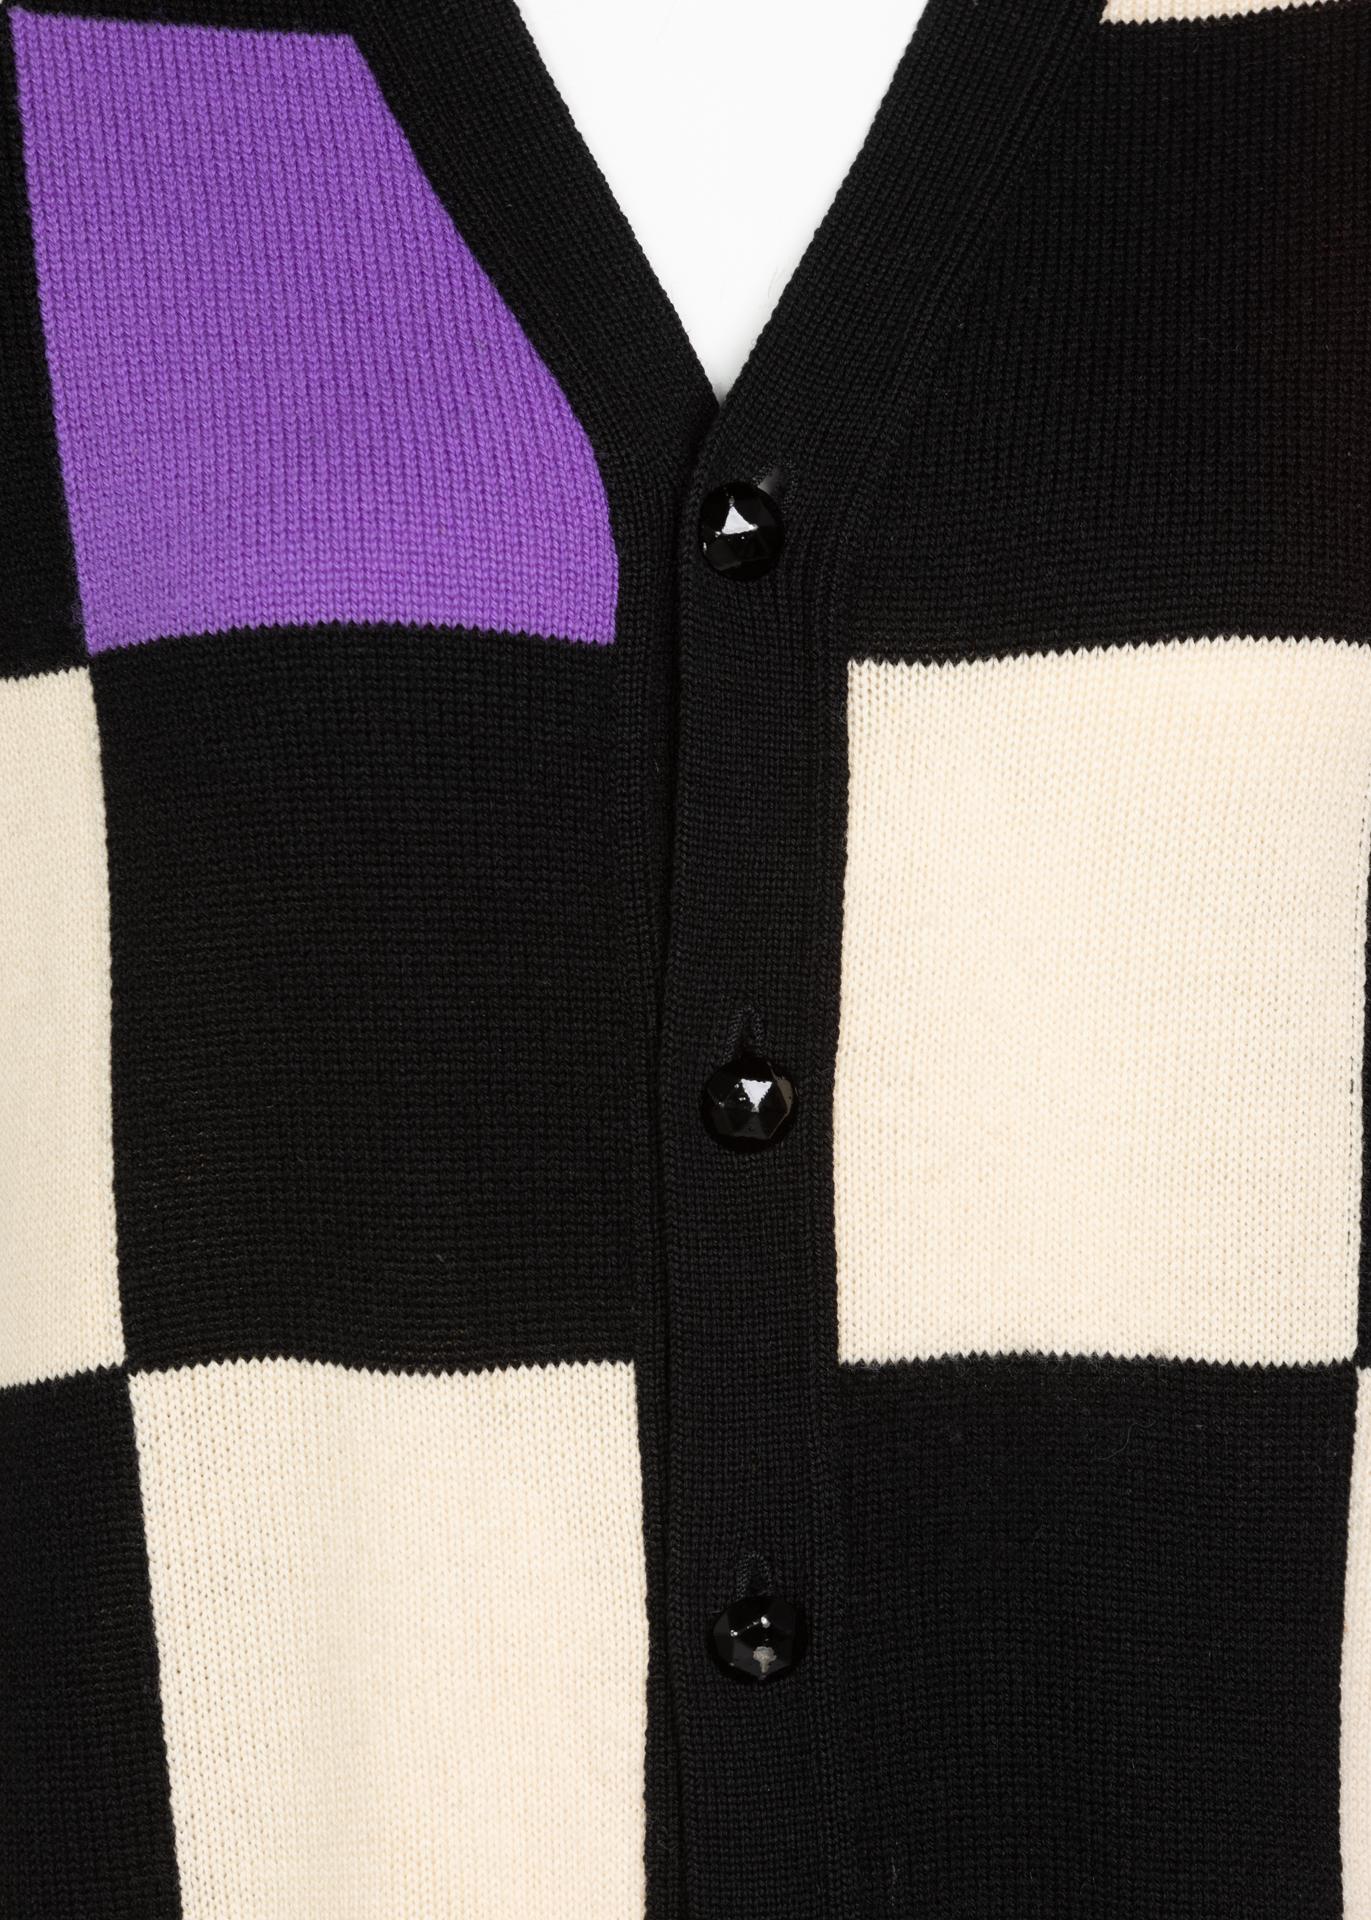 Black Gianni Versace Colorblock Sweater Vest, 1980s For Sale